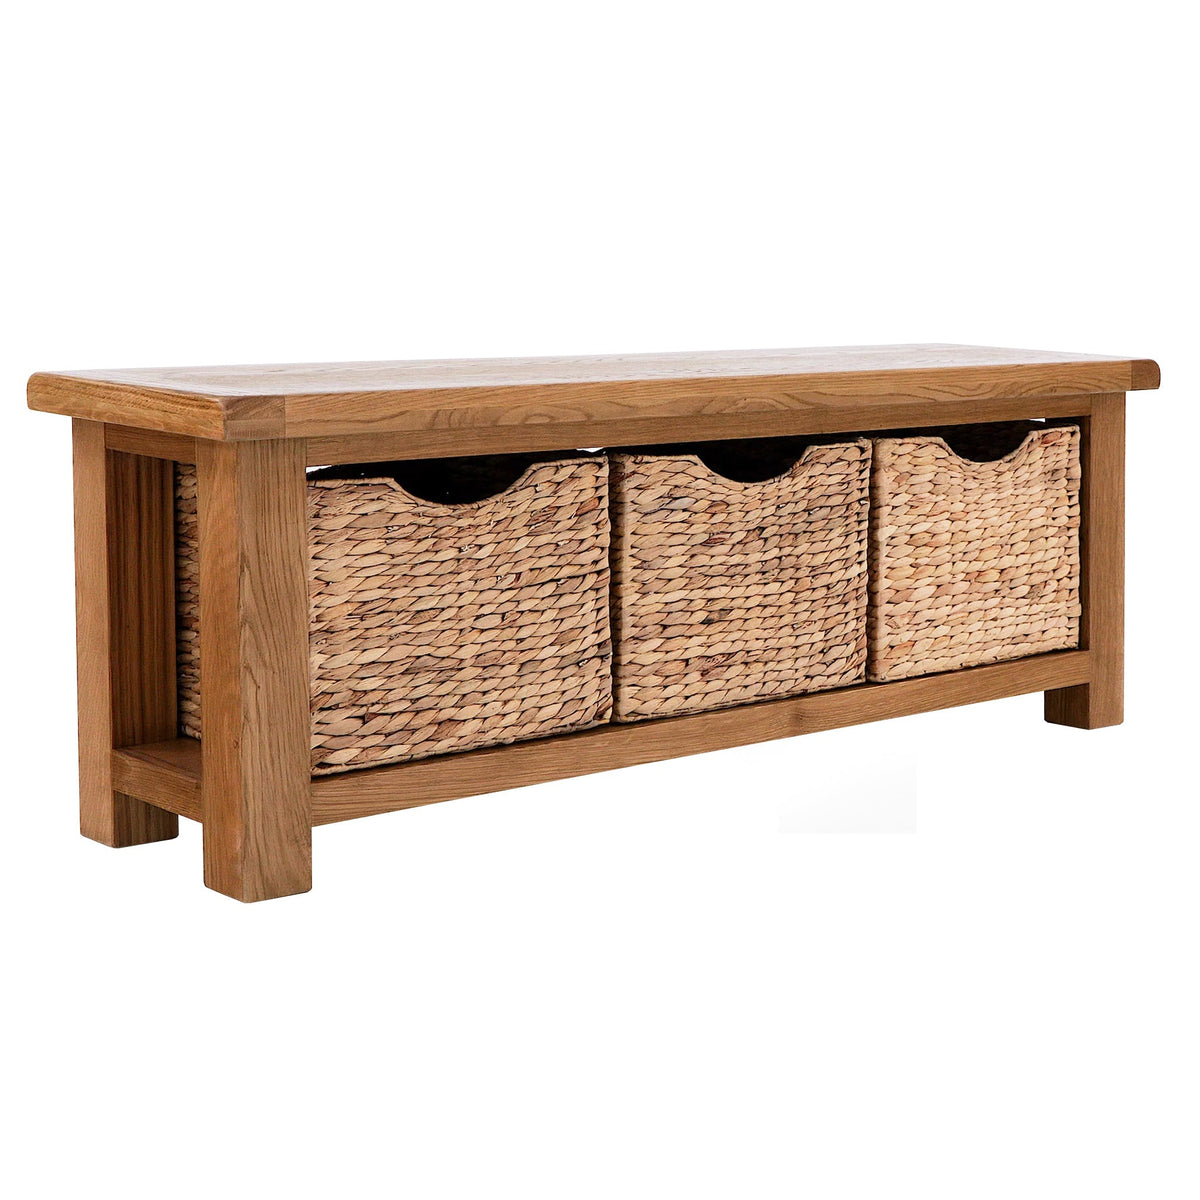 Zelah Oak Bench with Baskets by Roseland Furniture